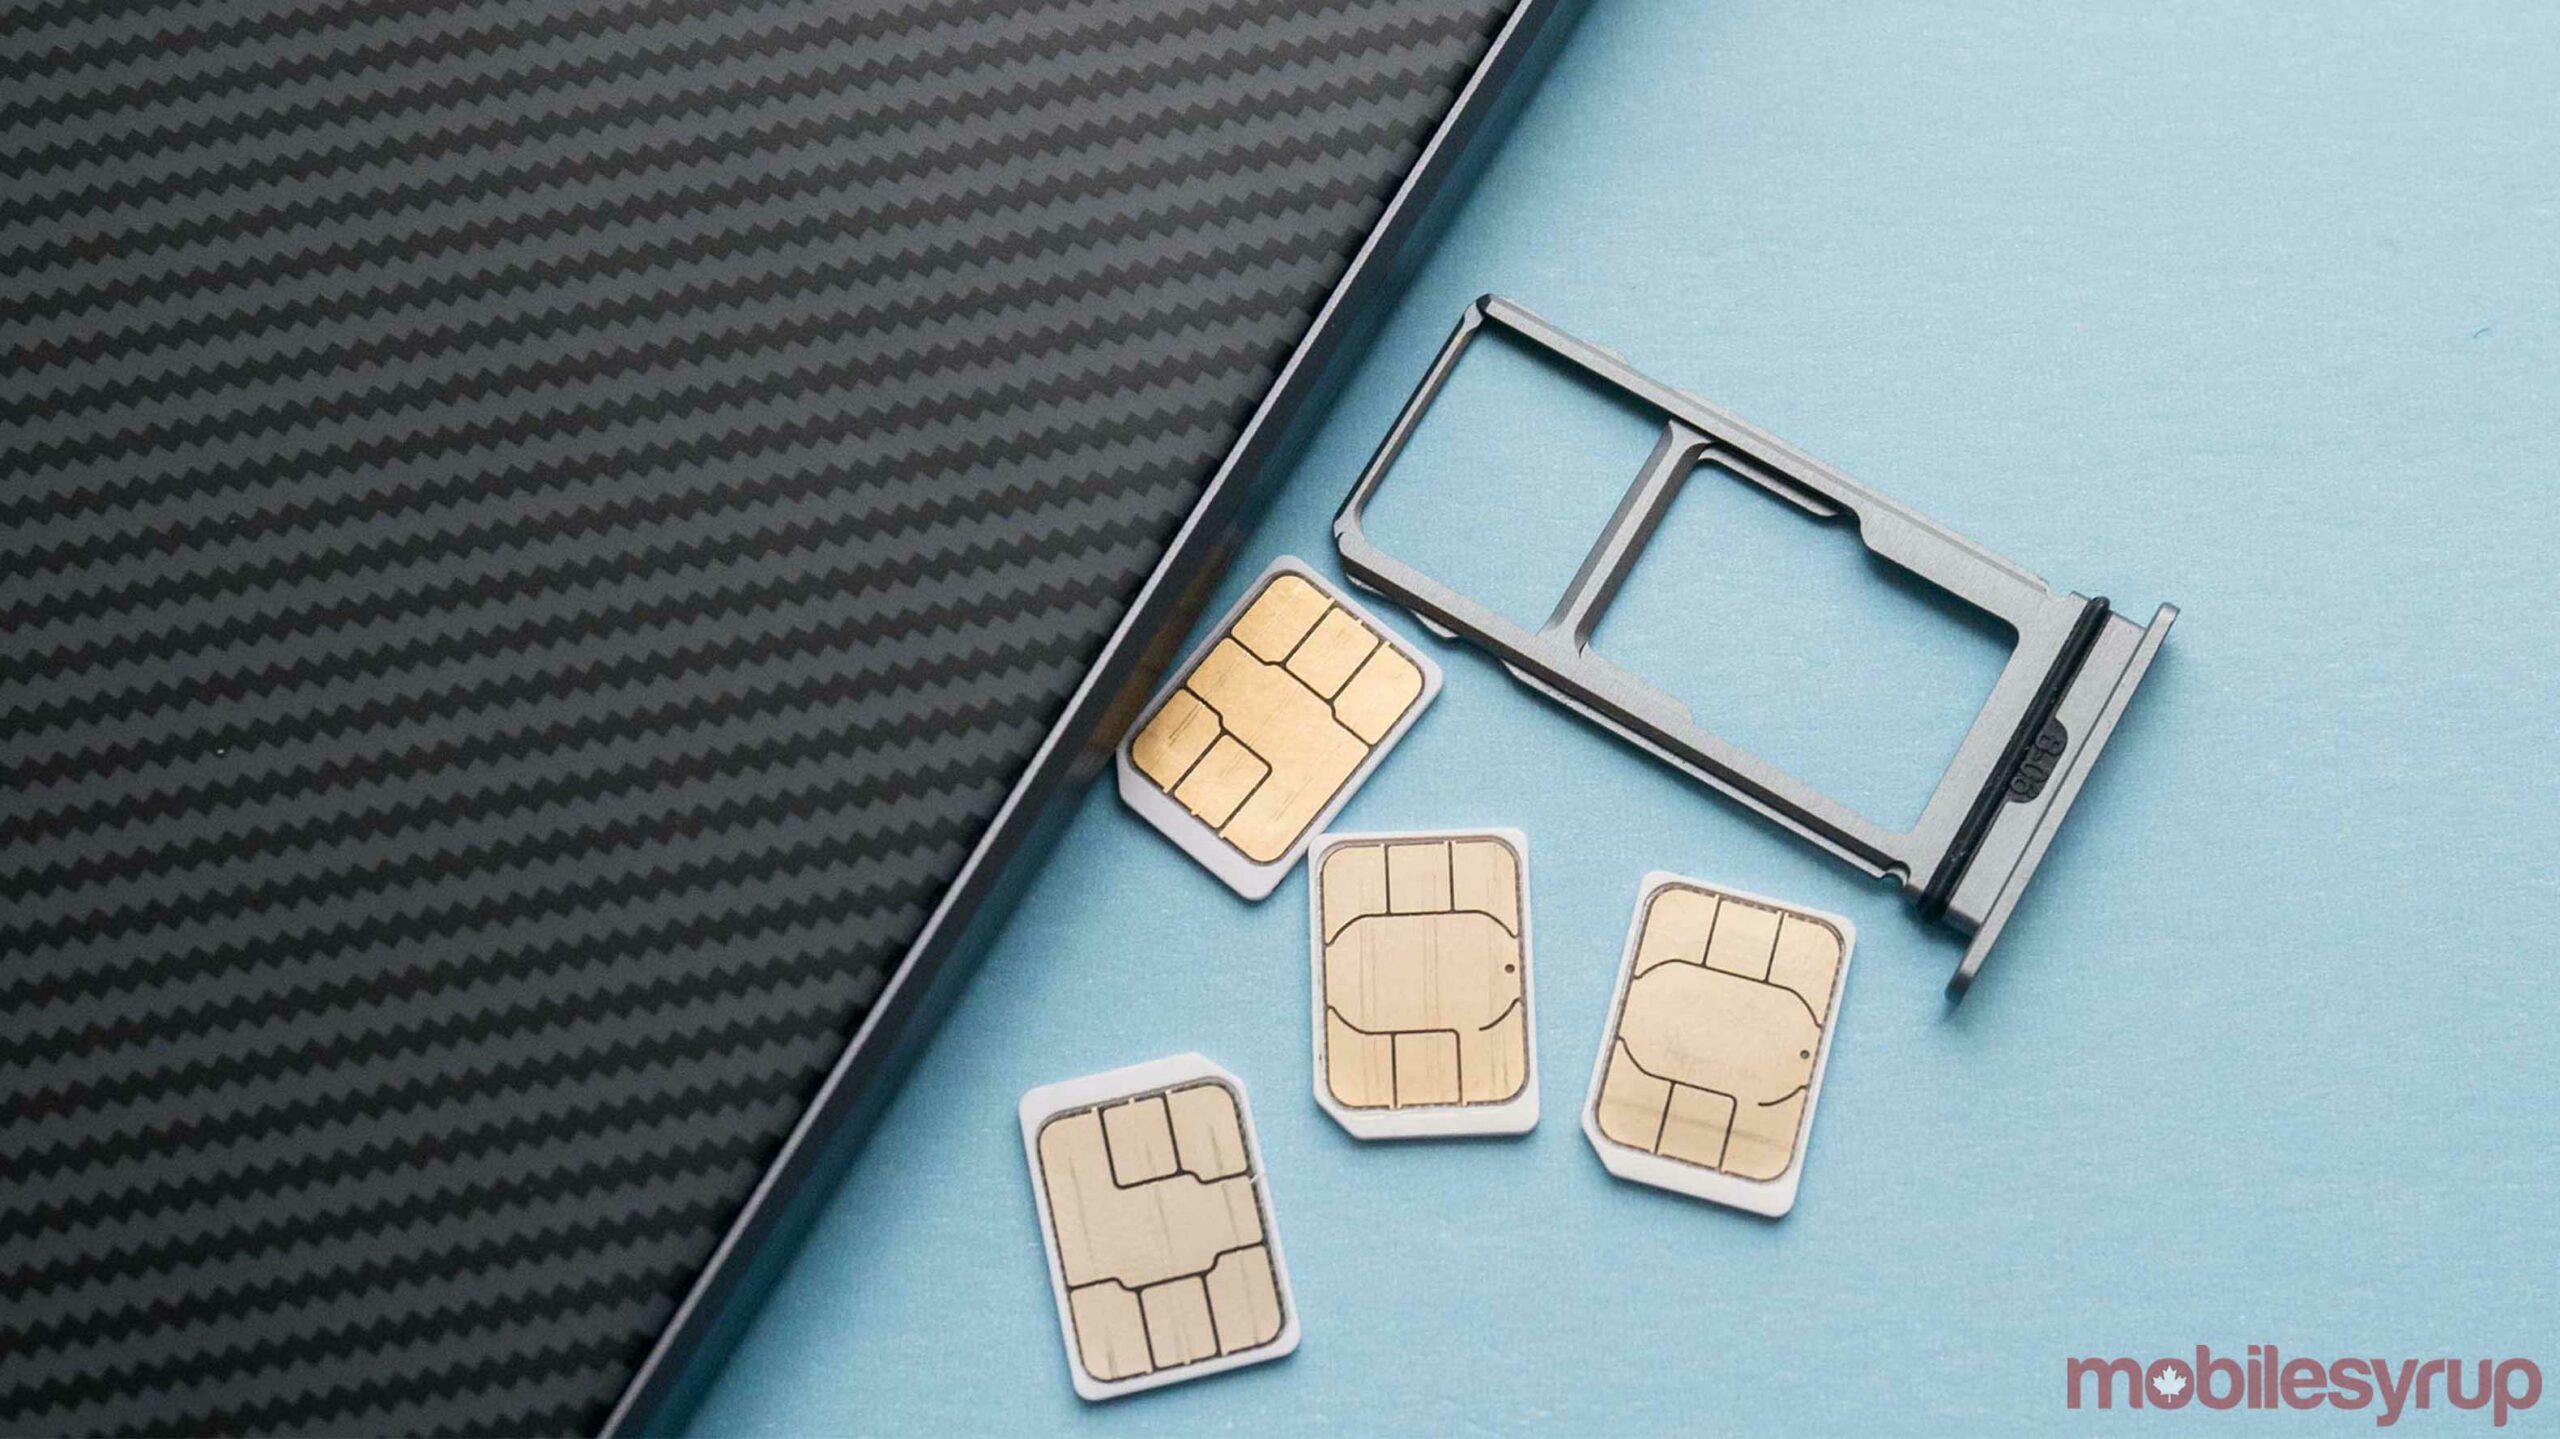 SIM cards and a smartphone SIM card tray